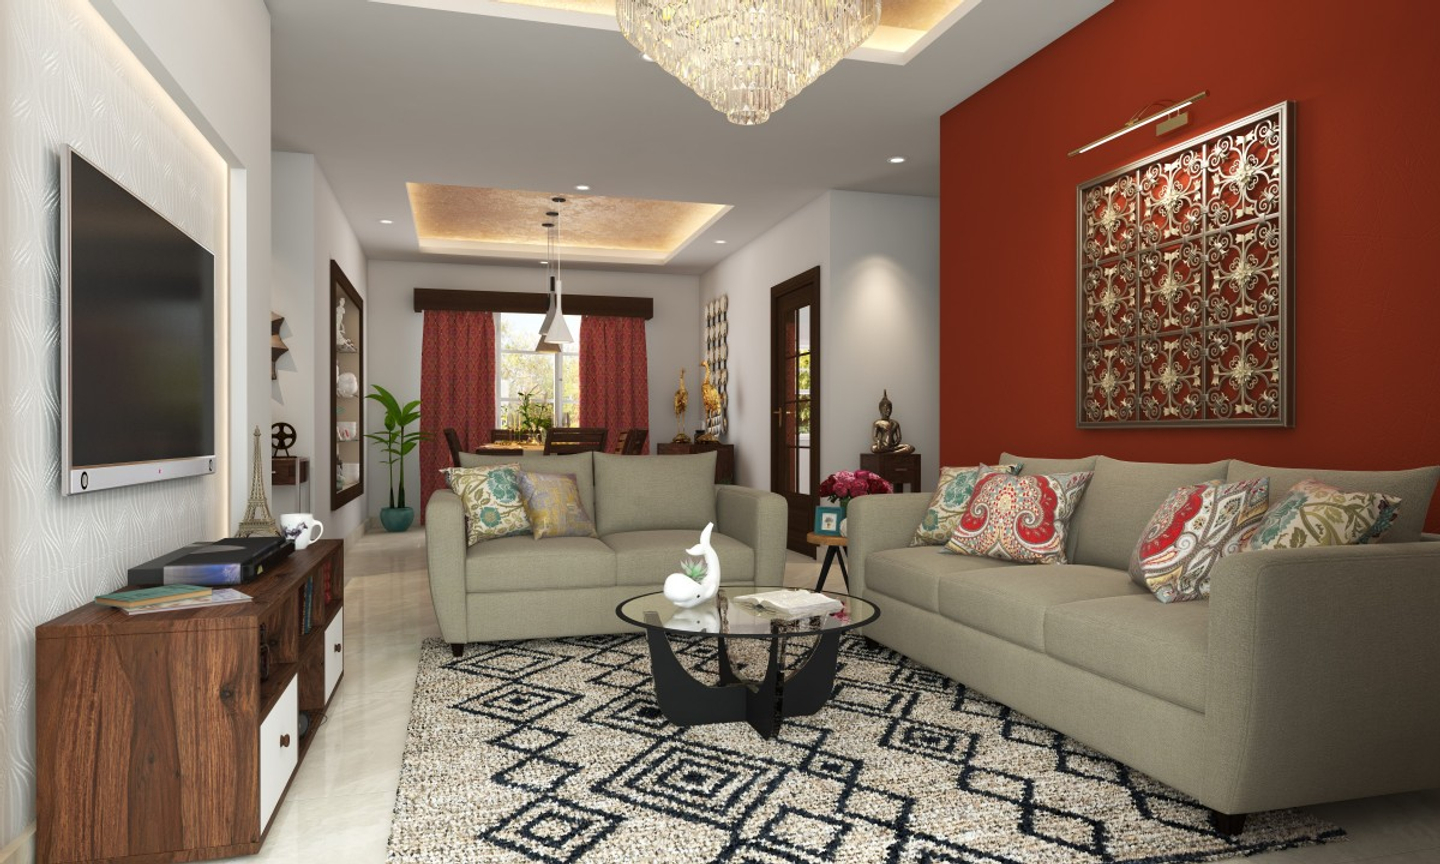 Buy Living Room online in India - livspace.com